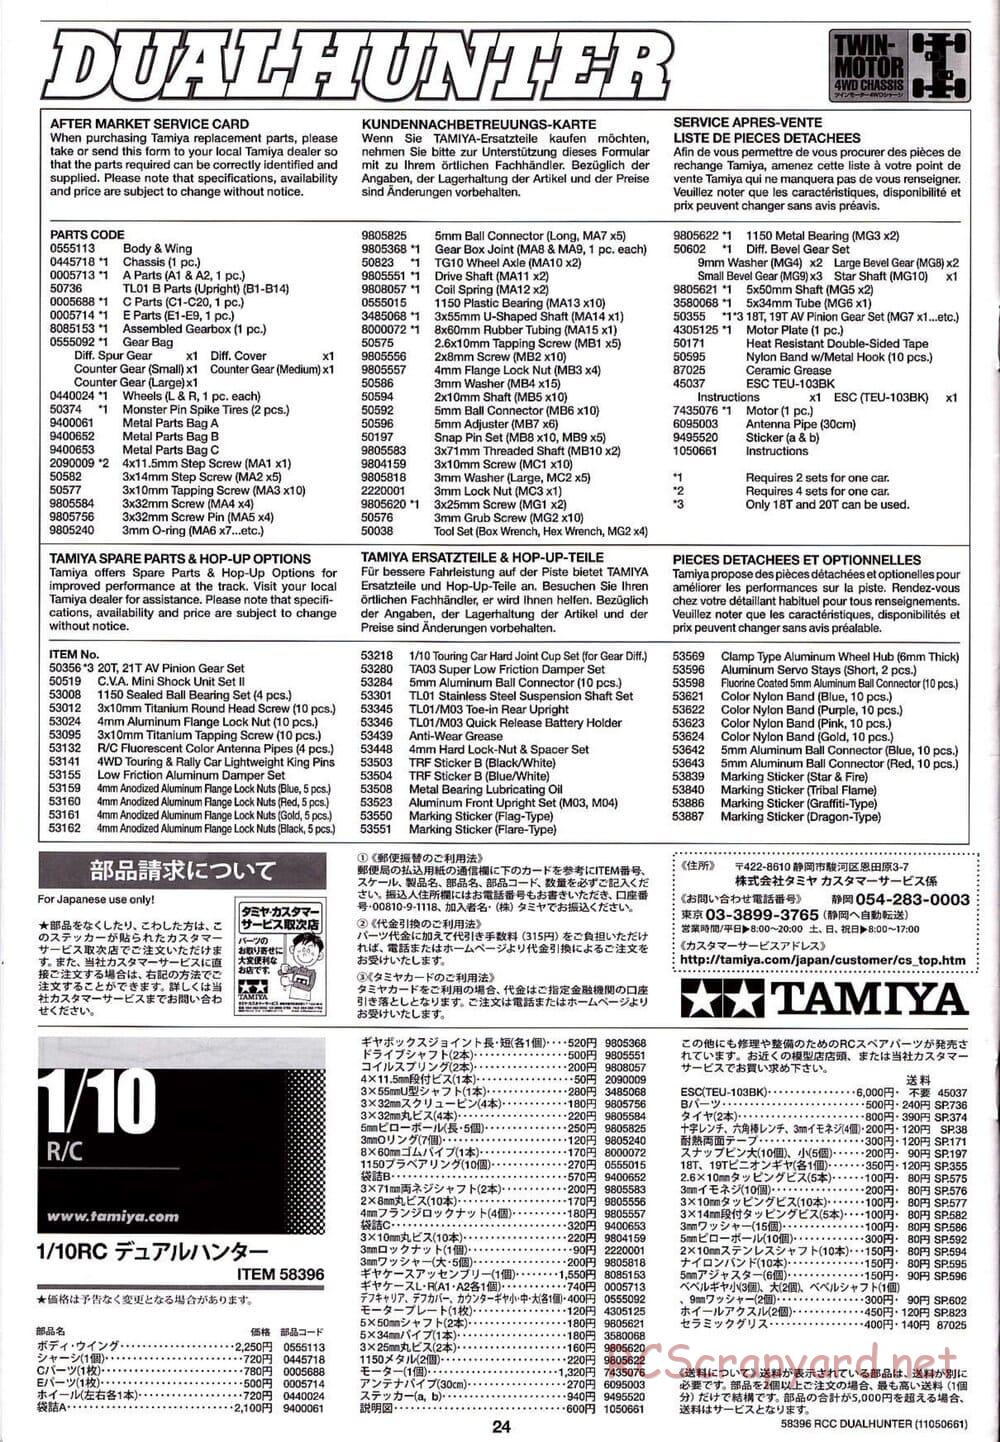 Tamiya - Dualhunter - WR-01 Chassis - Manual - Page 24